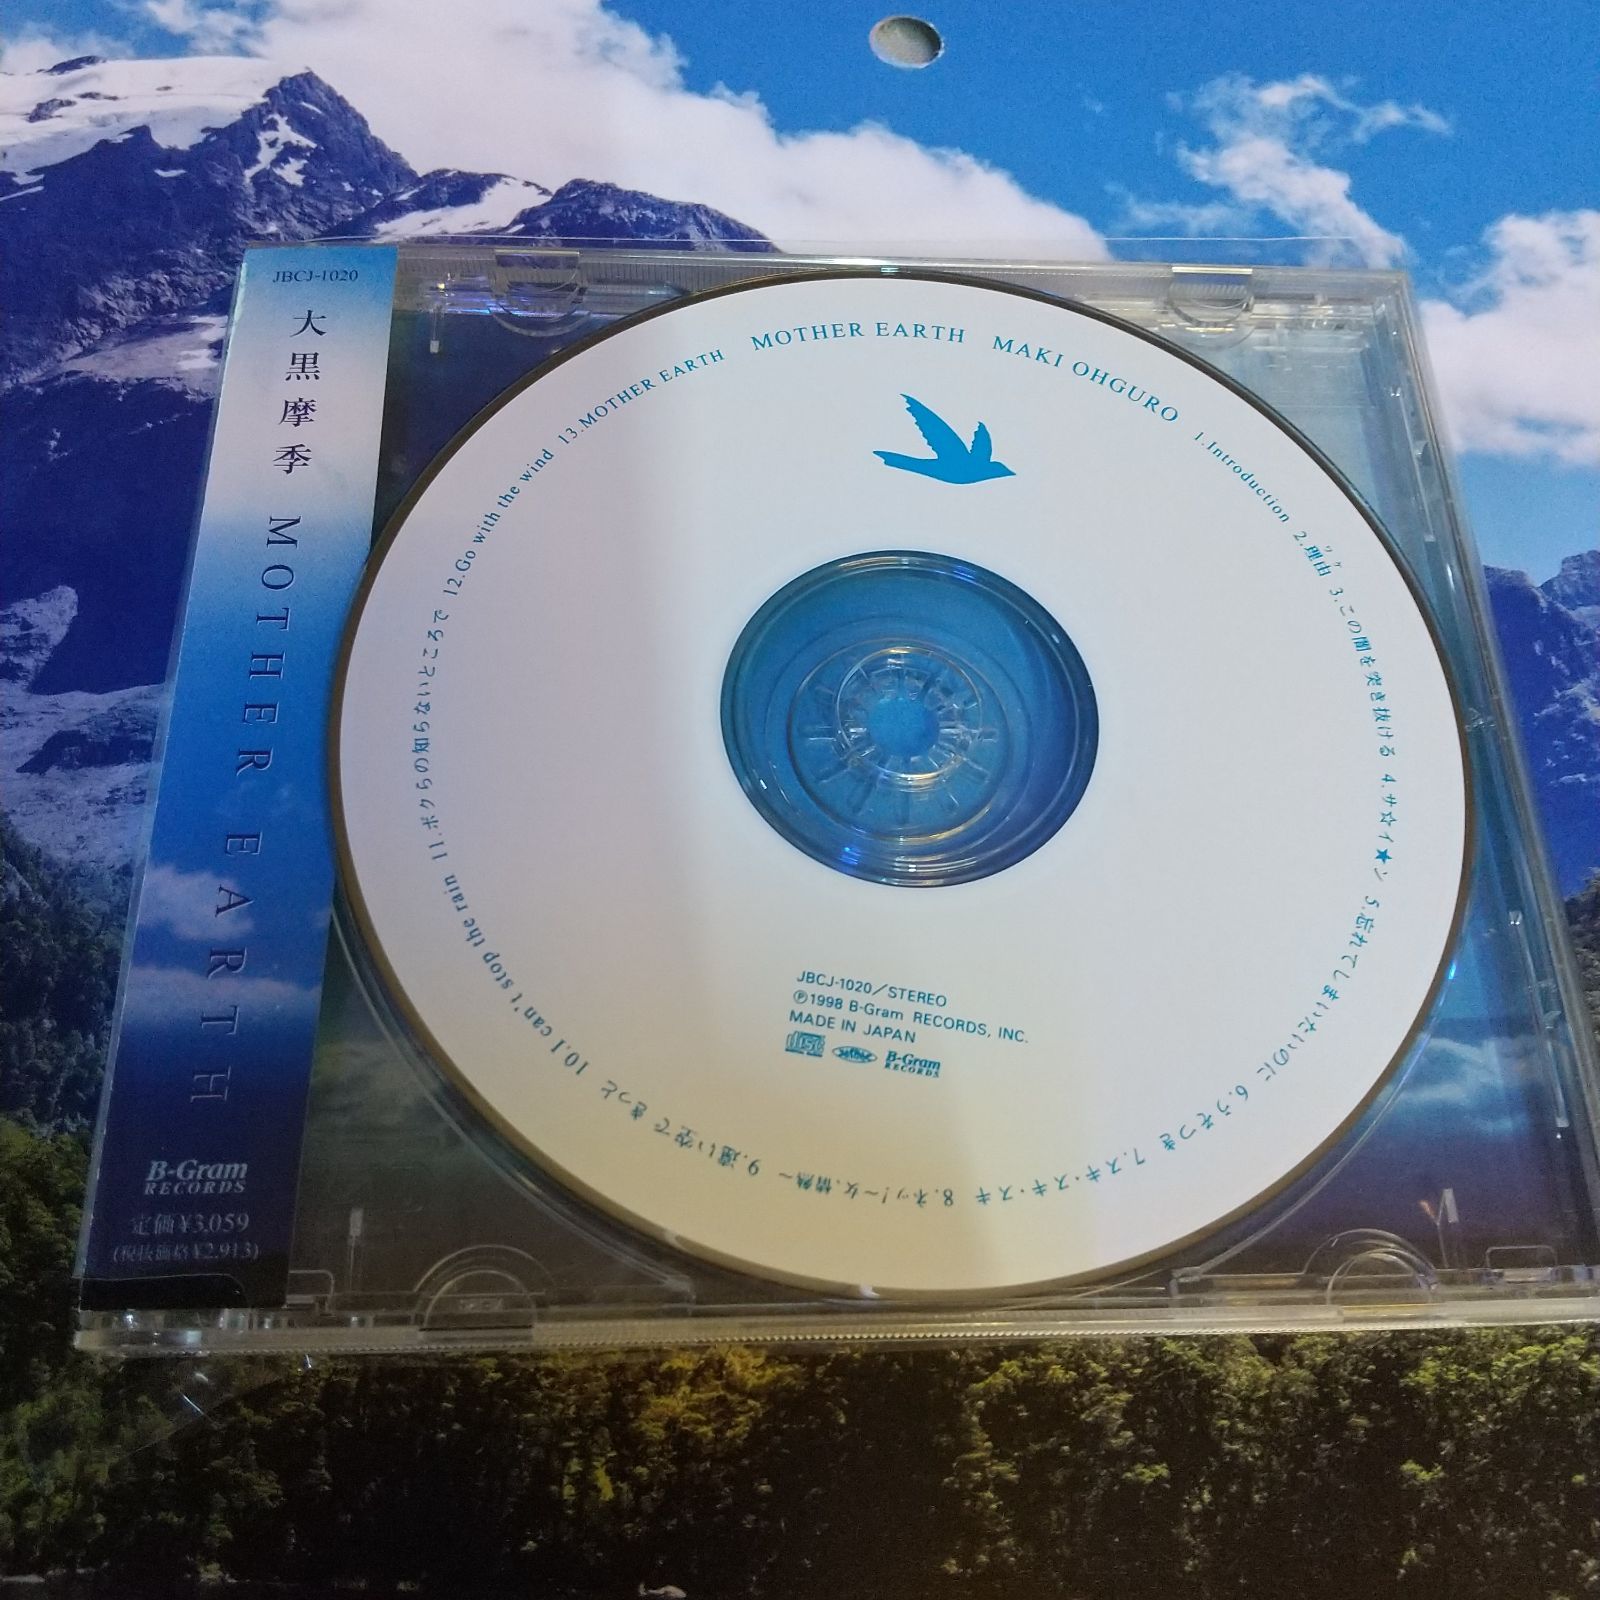 MOTHER EARTH 大黒摩季 - CD